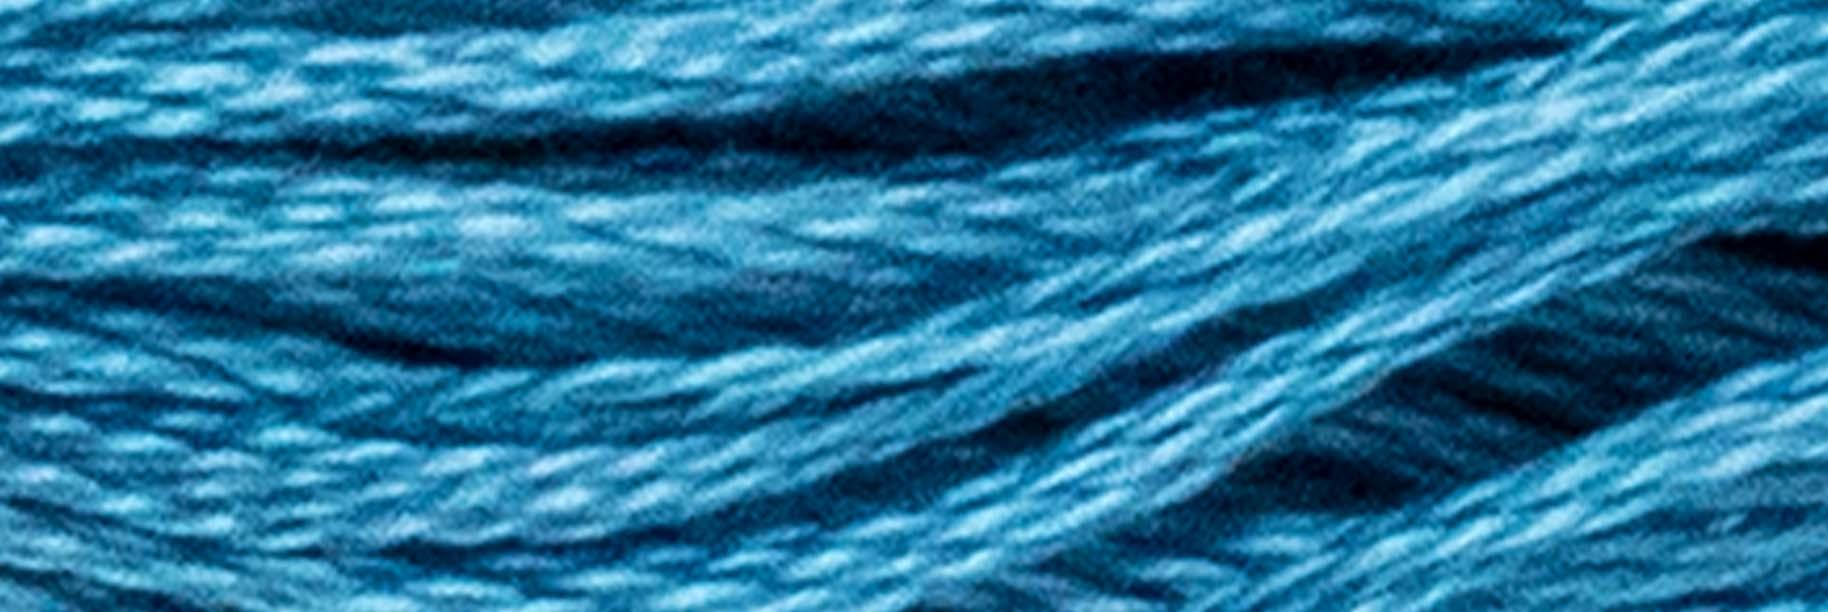 Stranded Cotton Luca-S - 199 / DMC 518 / Anchor 161 - Luca-S Stranded Cotton